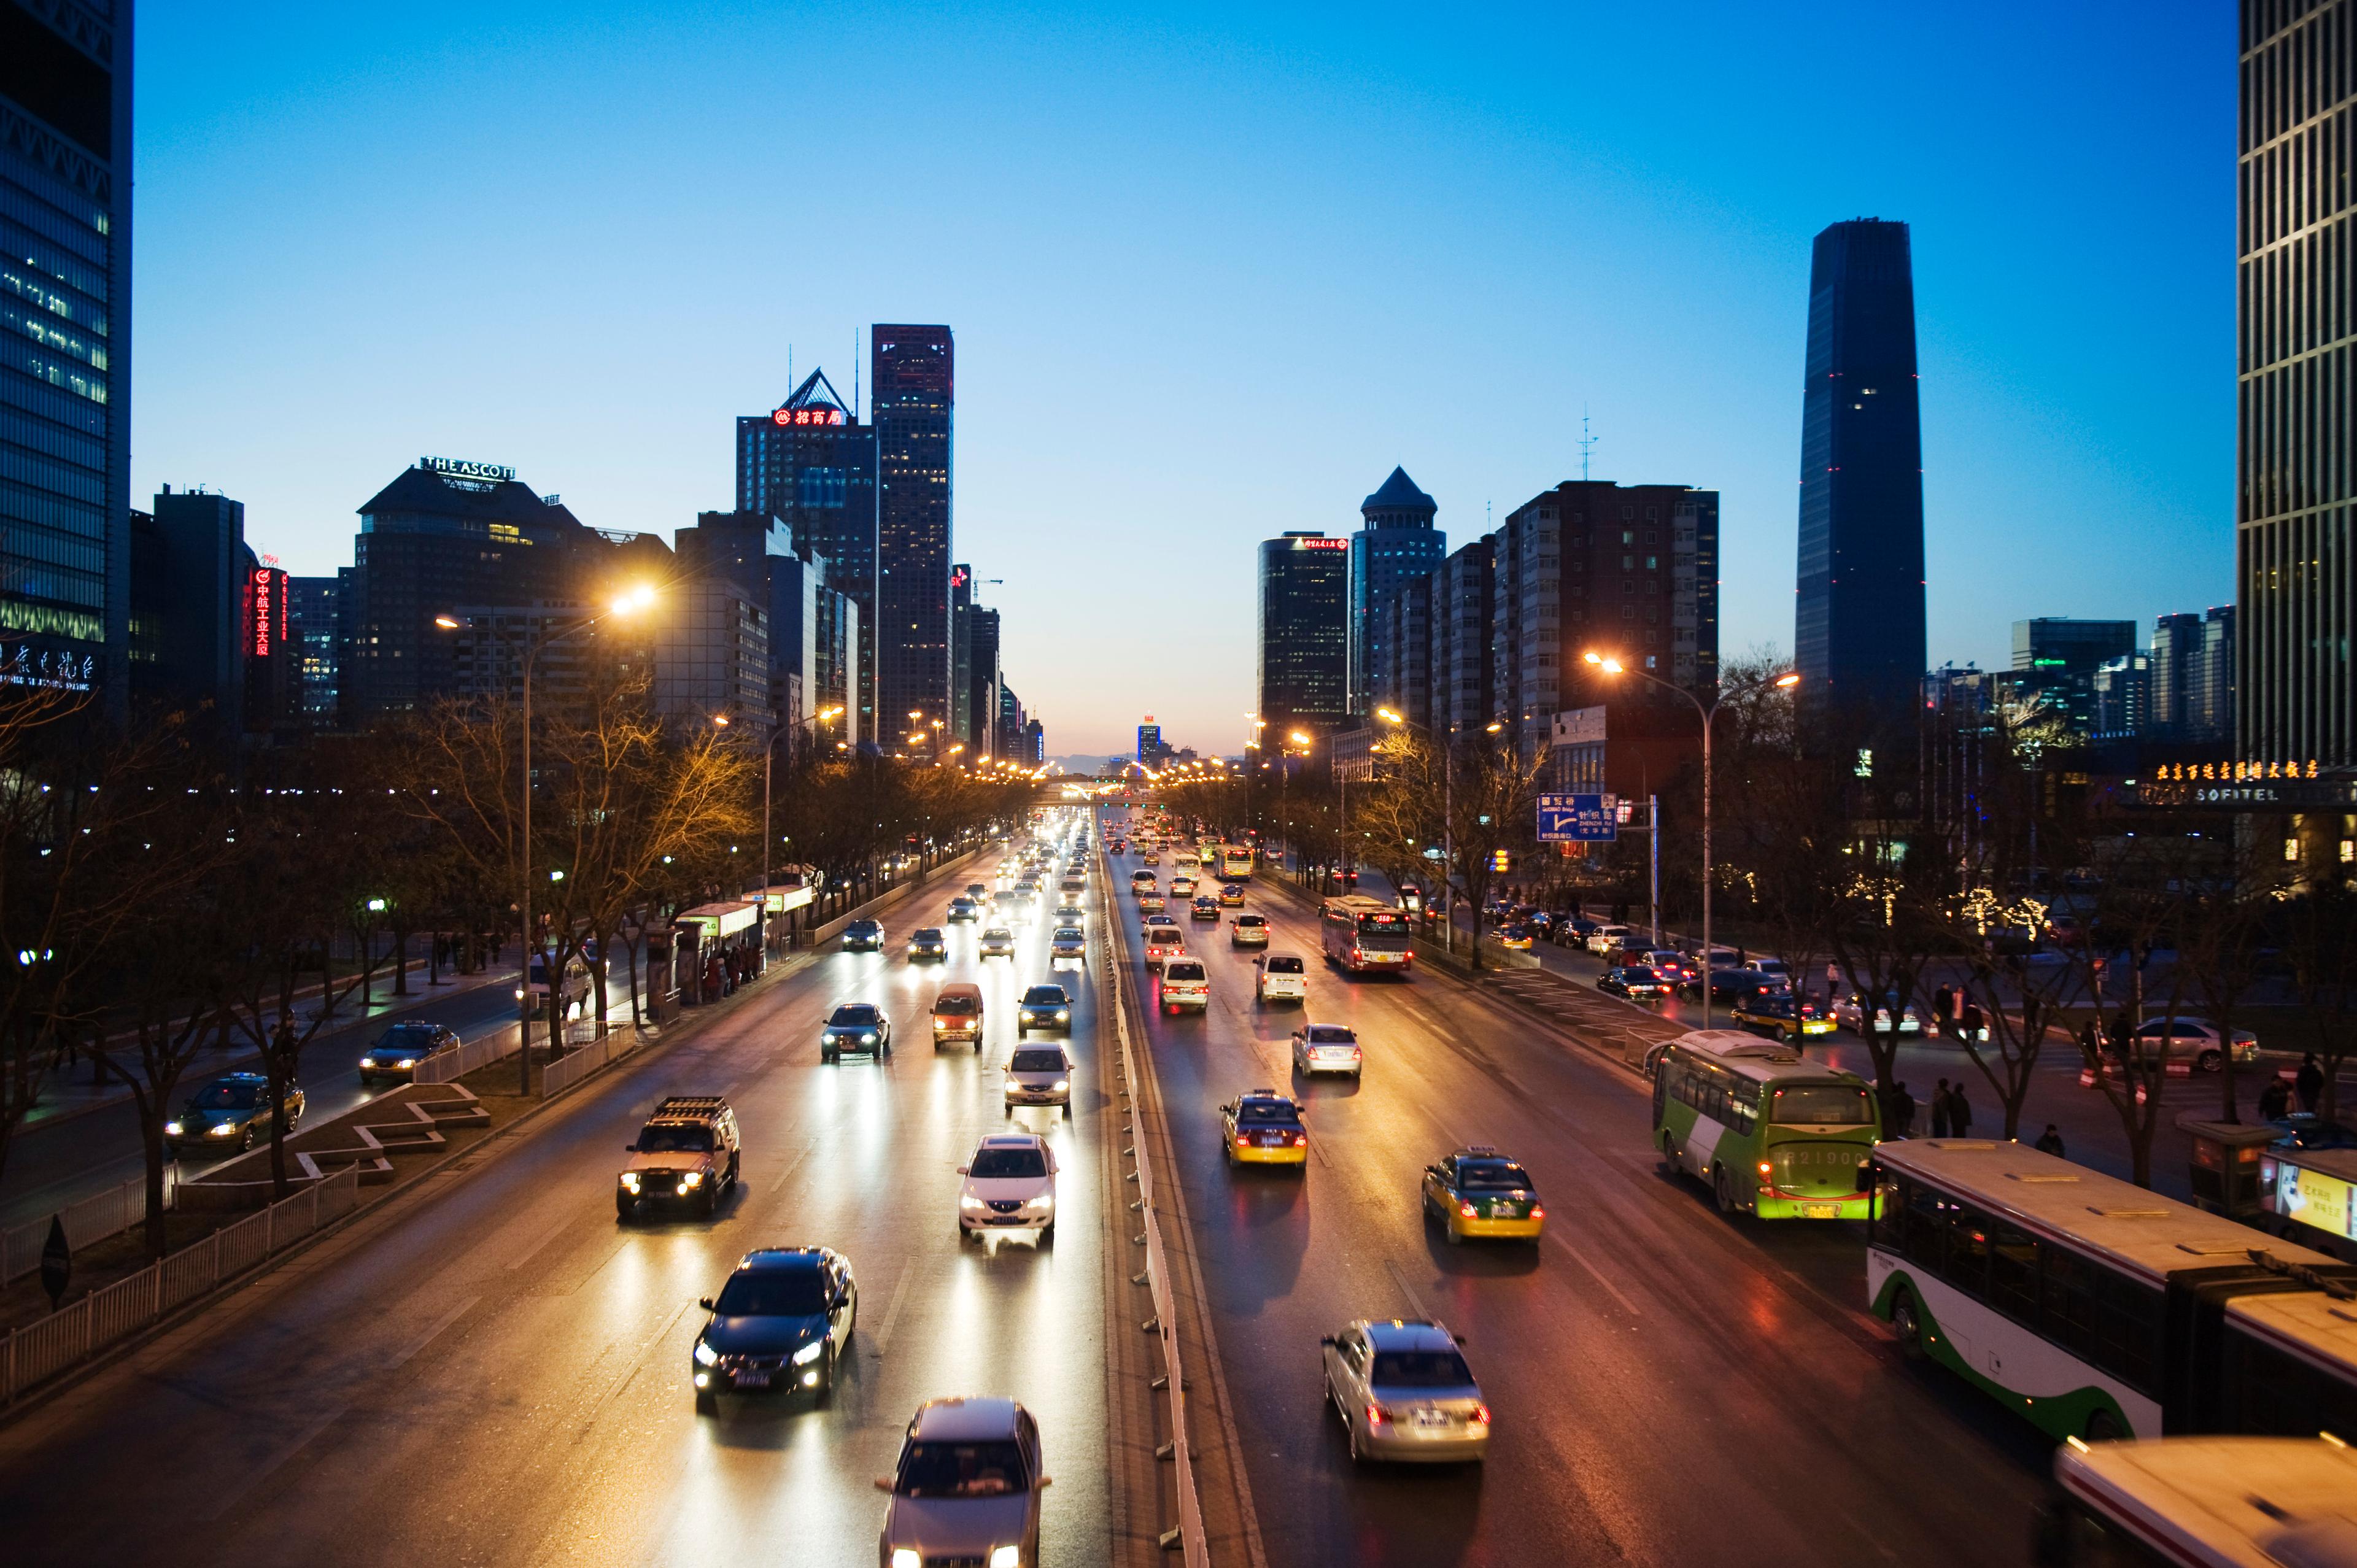 Megabyen Beijing får massivt brug for Smart City-løsninger, og dem skal danske virksomheder være klar til at kunne levere, mener Carsten Hansen. Foto: Polfoto